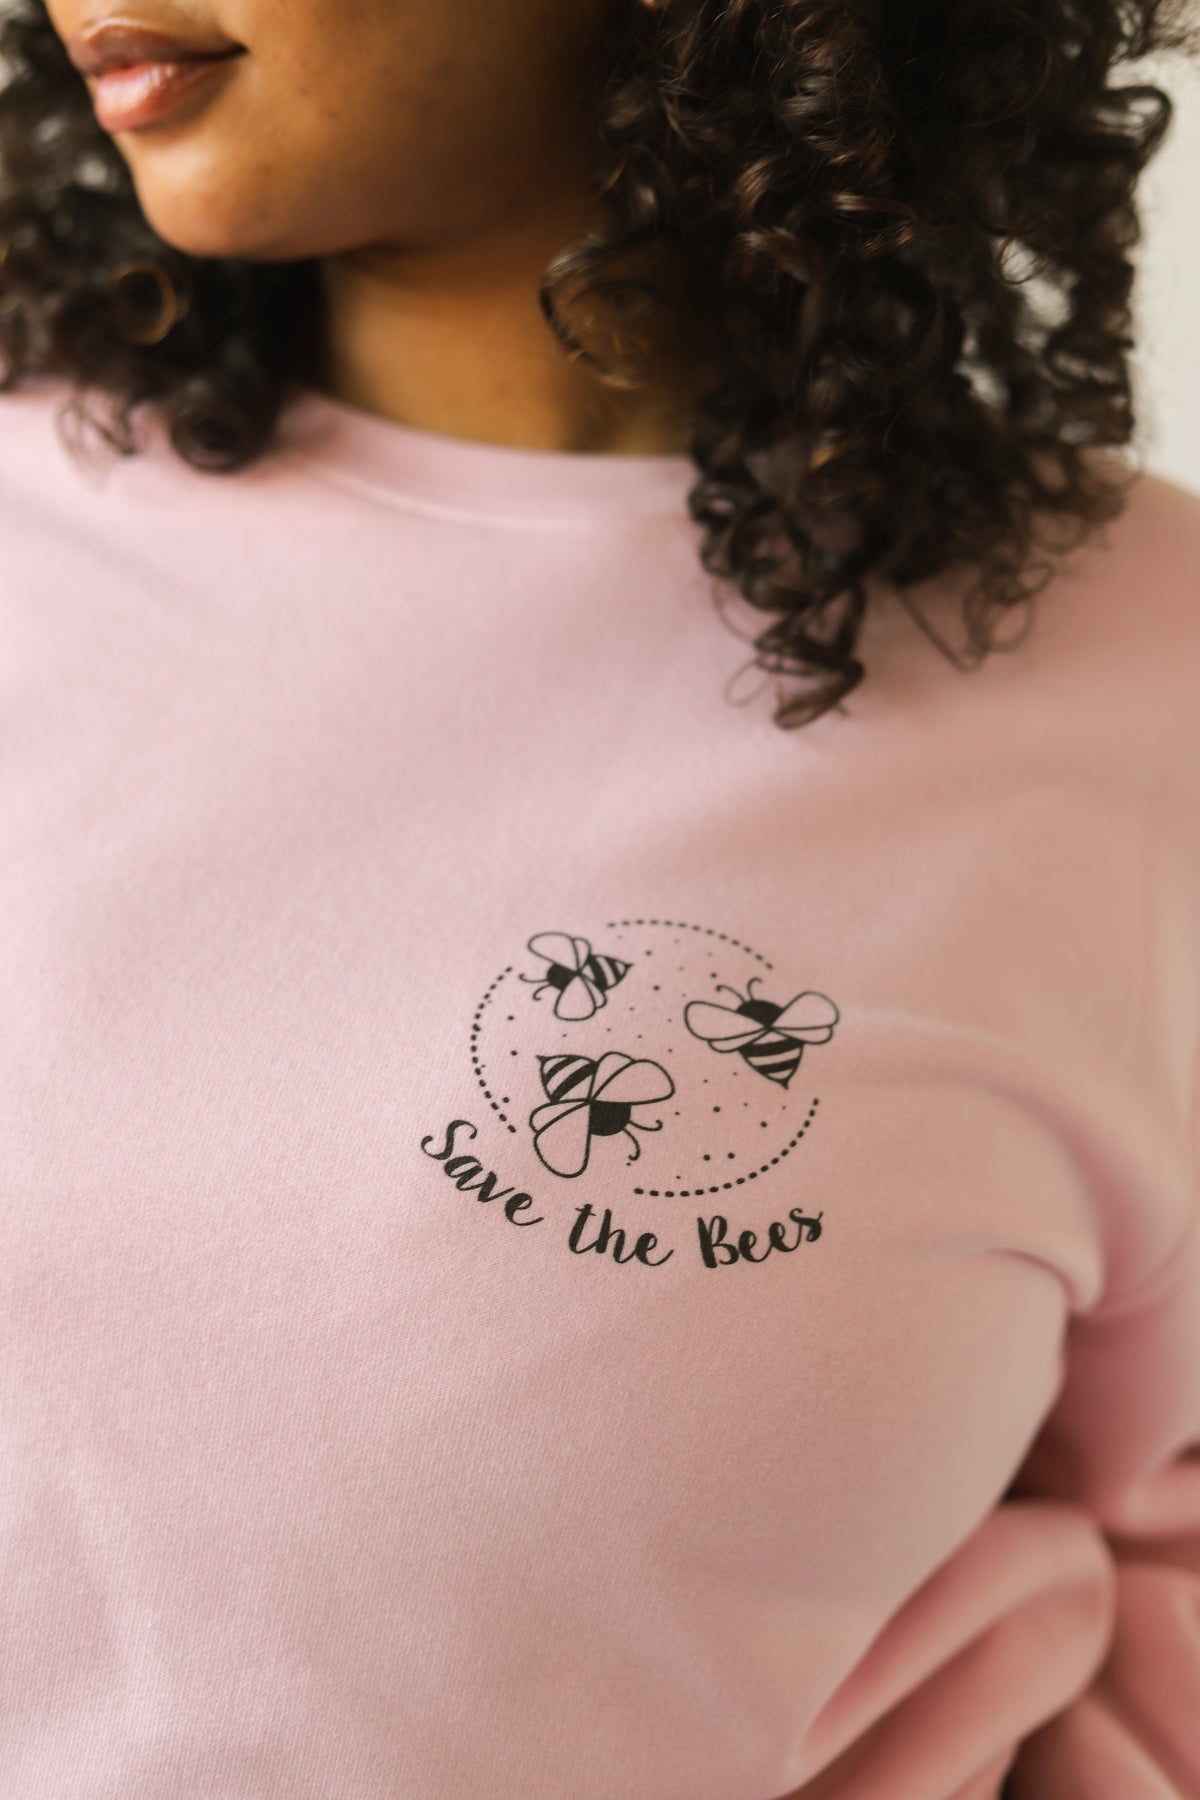 Save the Bees - Unisex Sustainable Sweatshirt